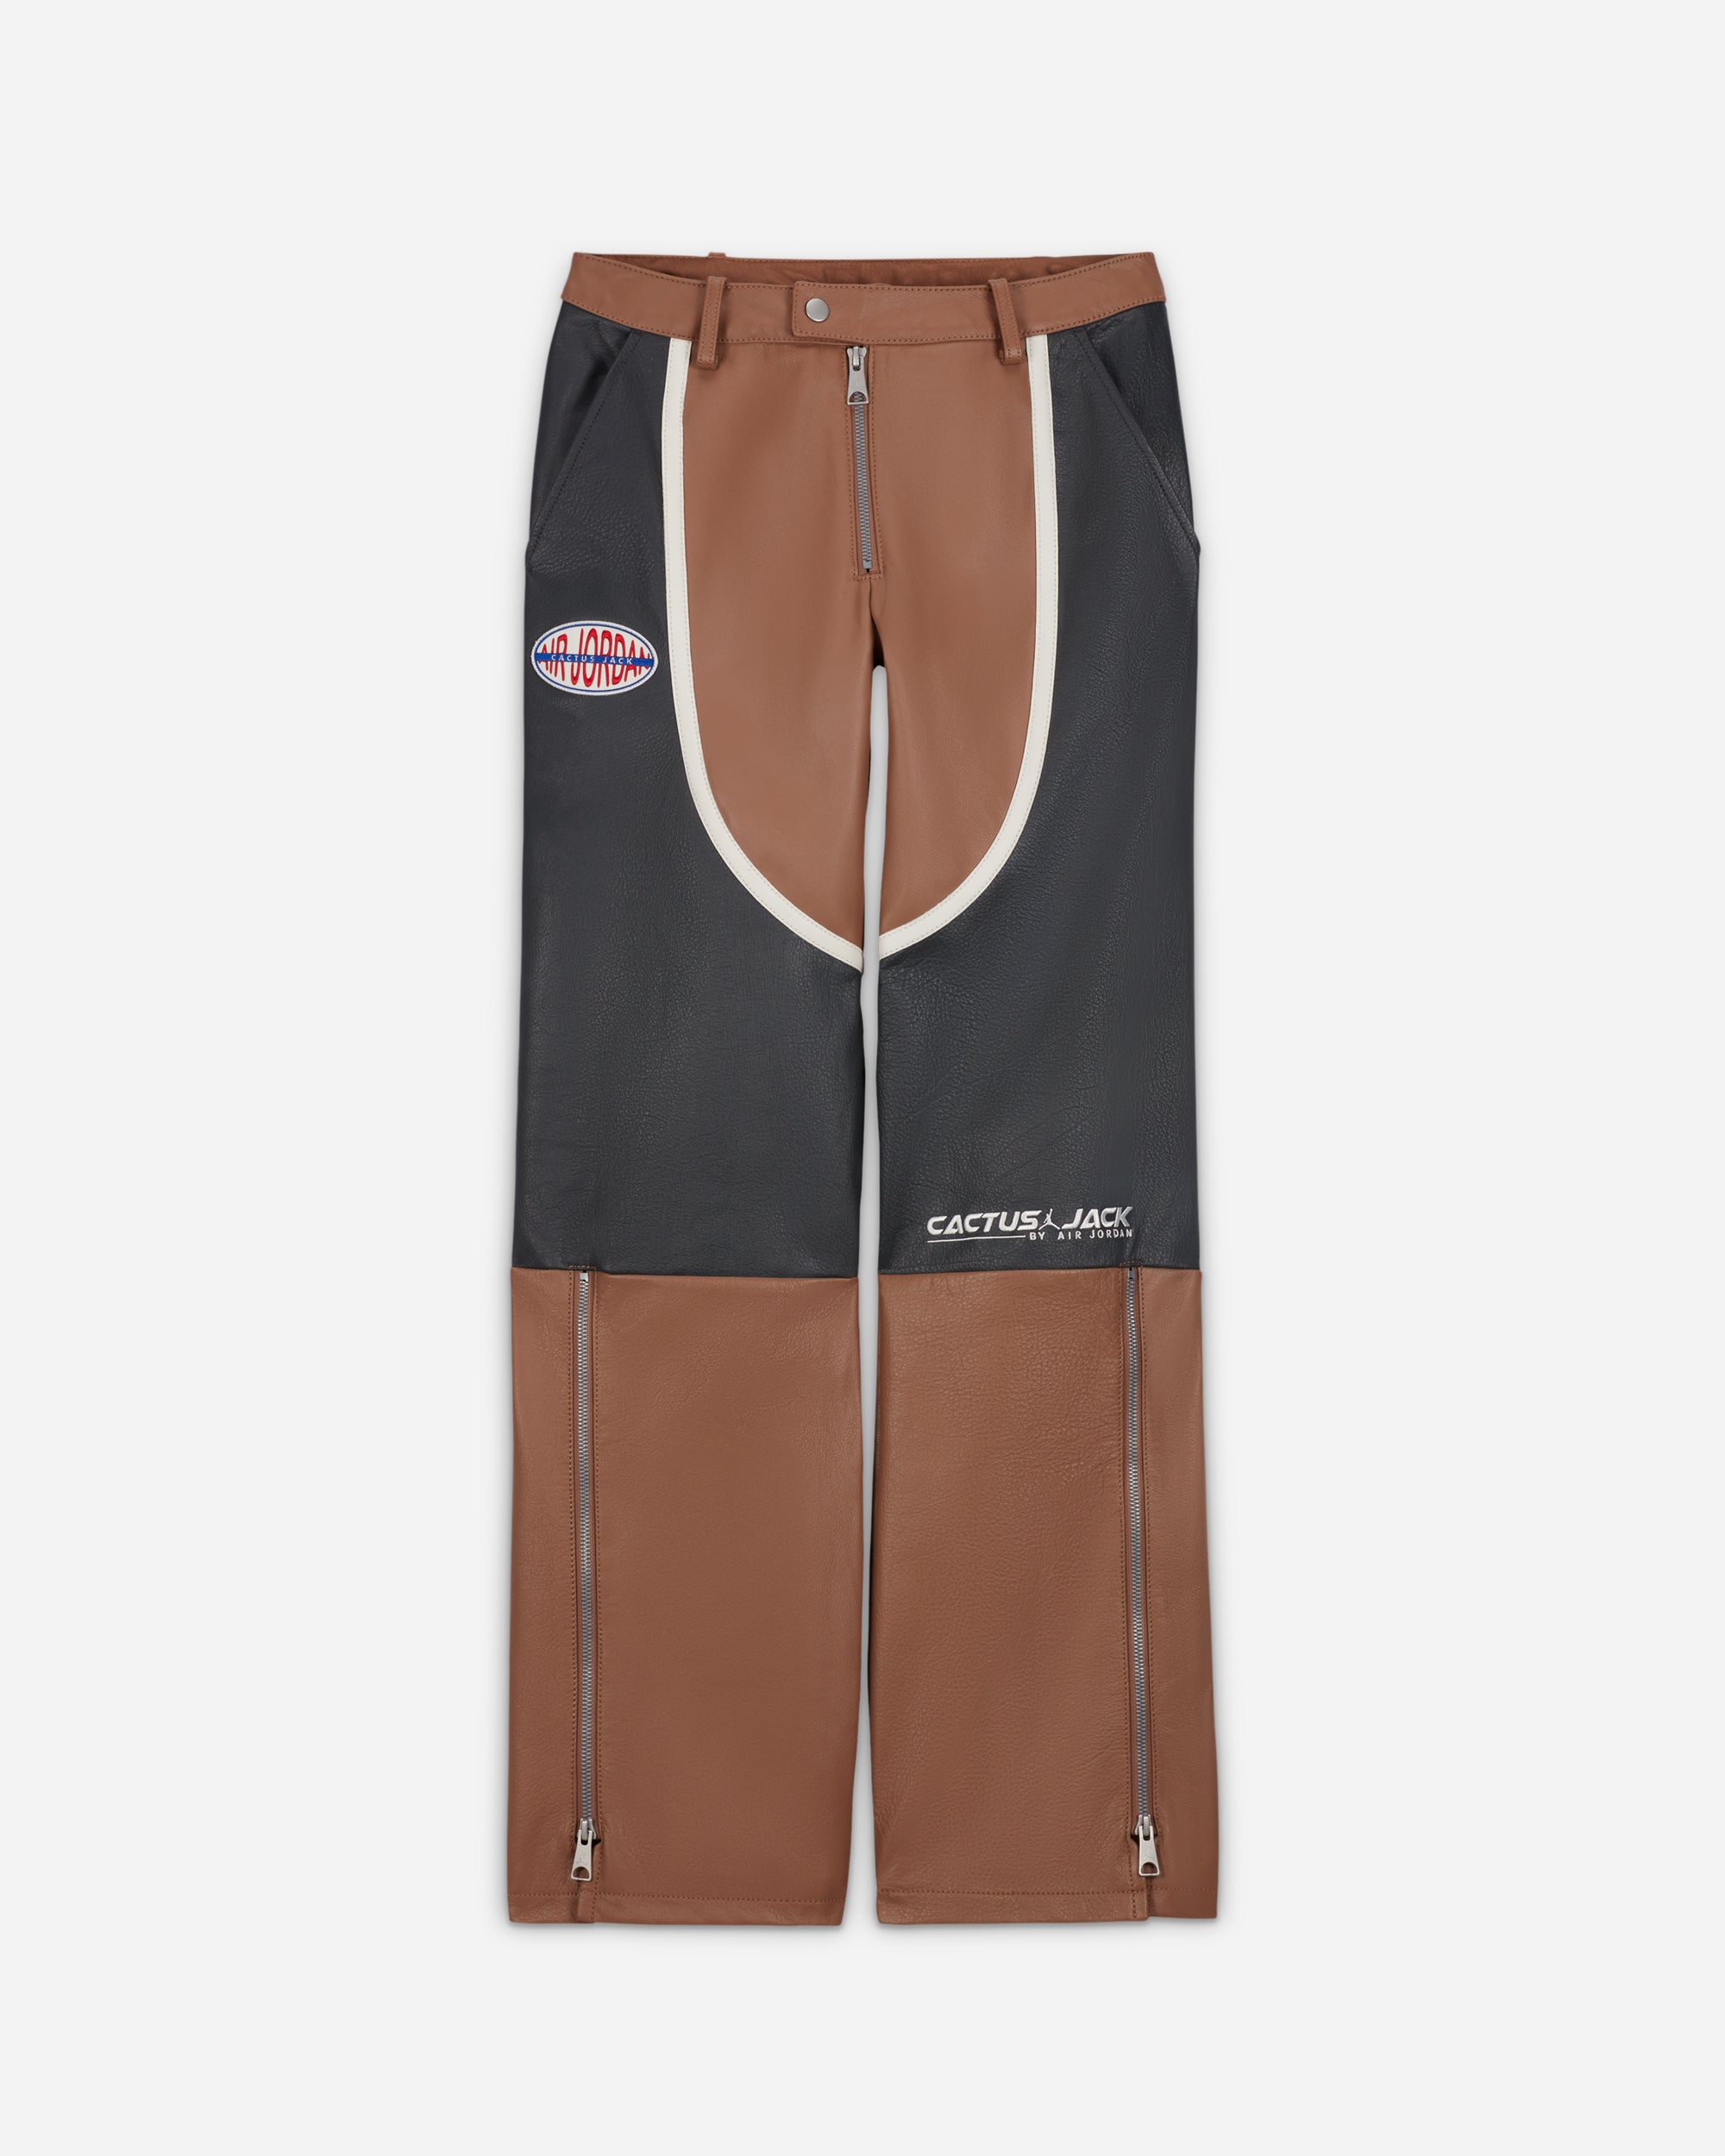 Jordan Brand x Travis Scott Moto Pants